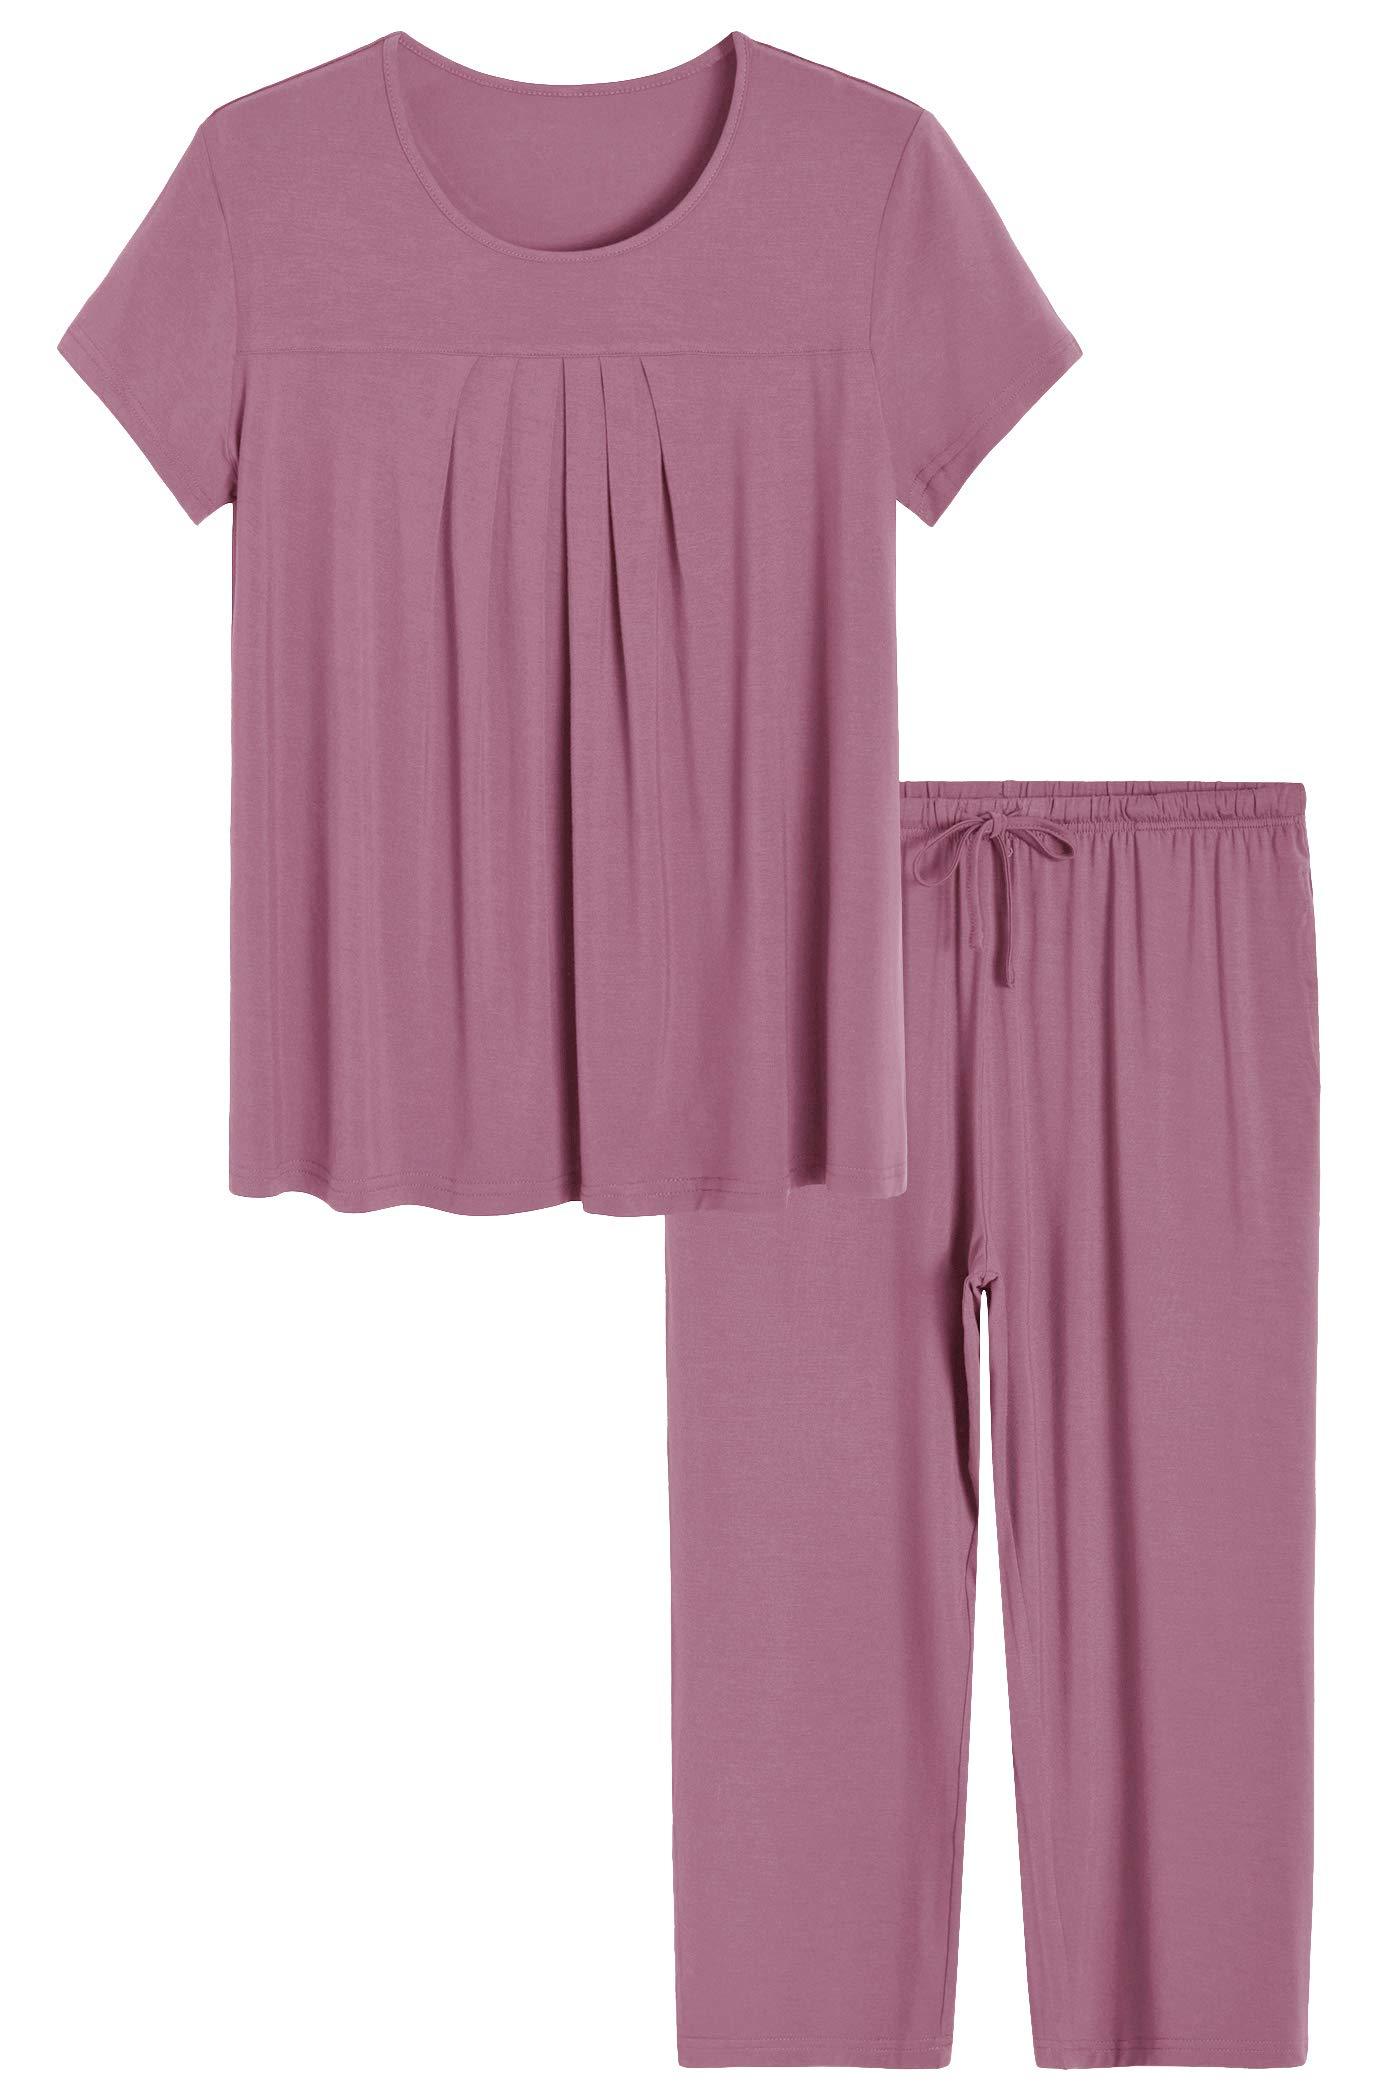 Women's Bamboo Pajamas Pleated Top and Capris Pjs Set – Latuza